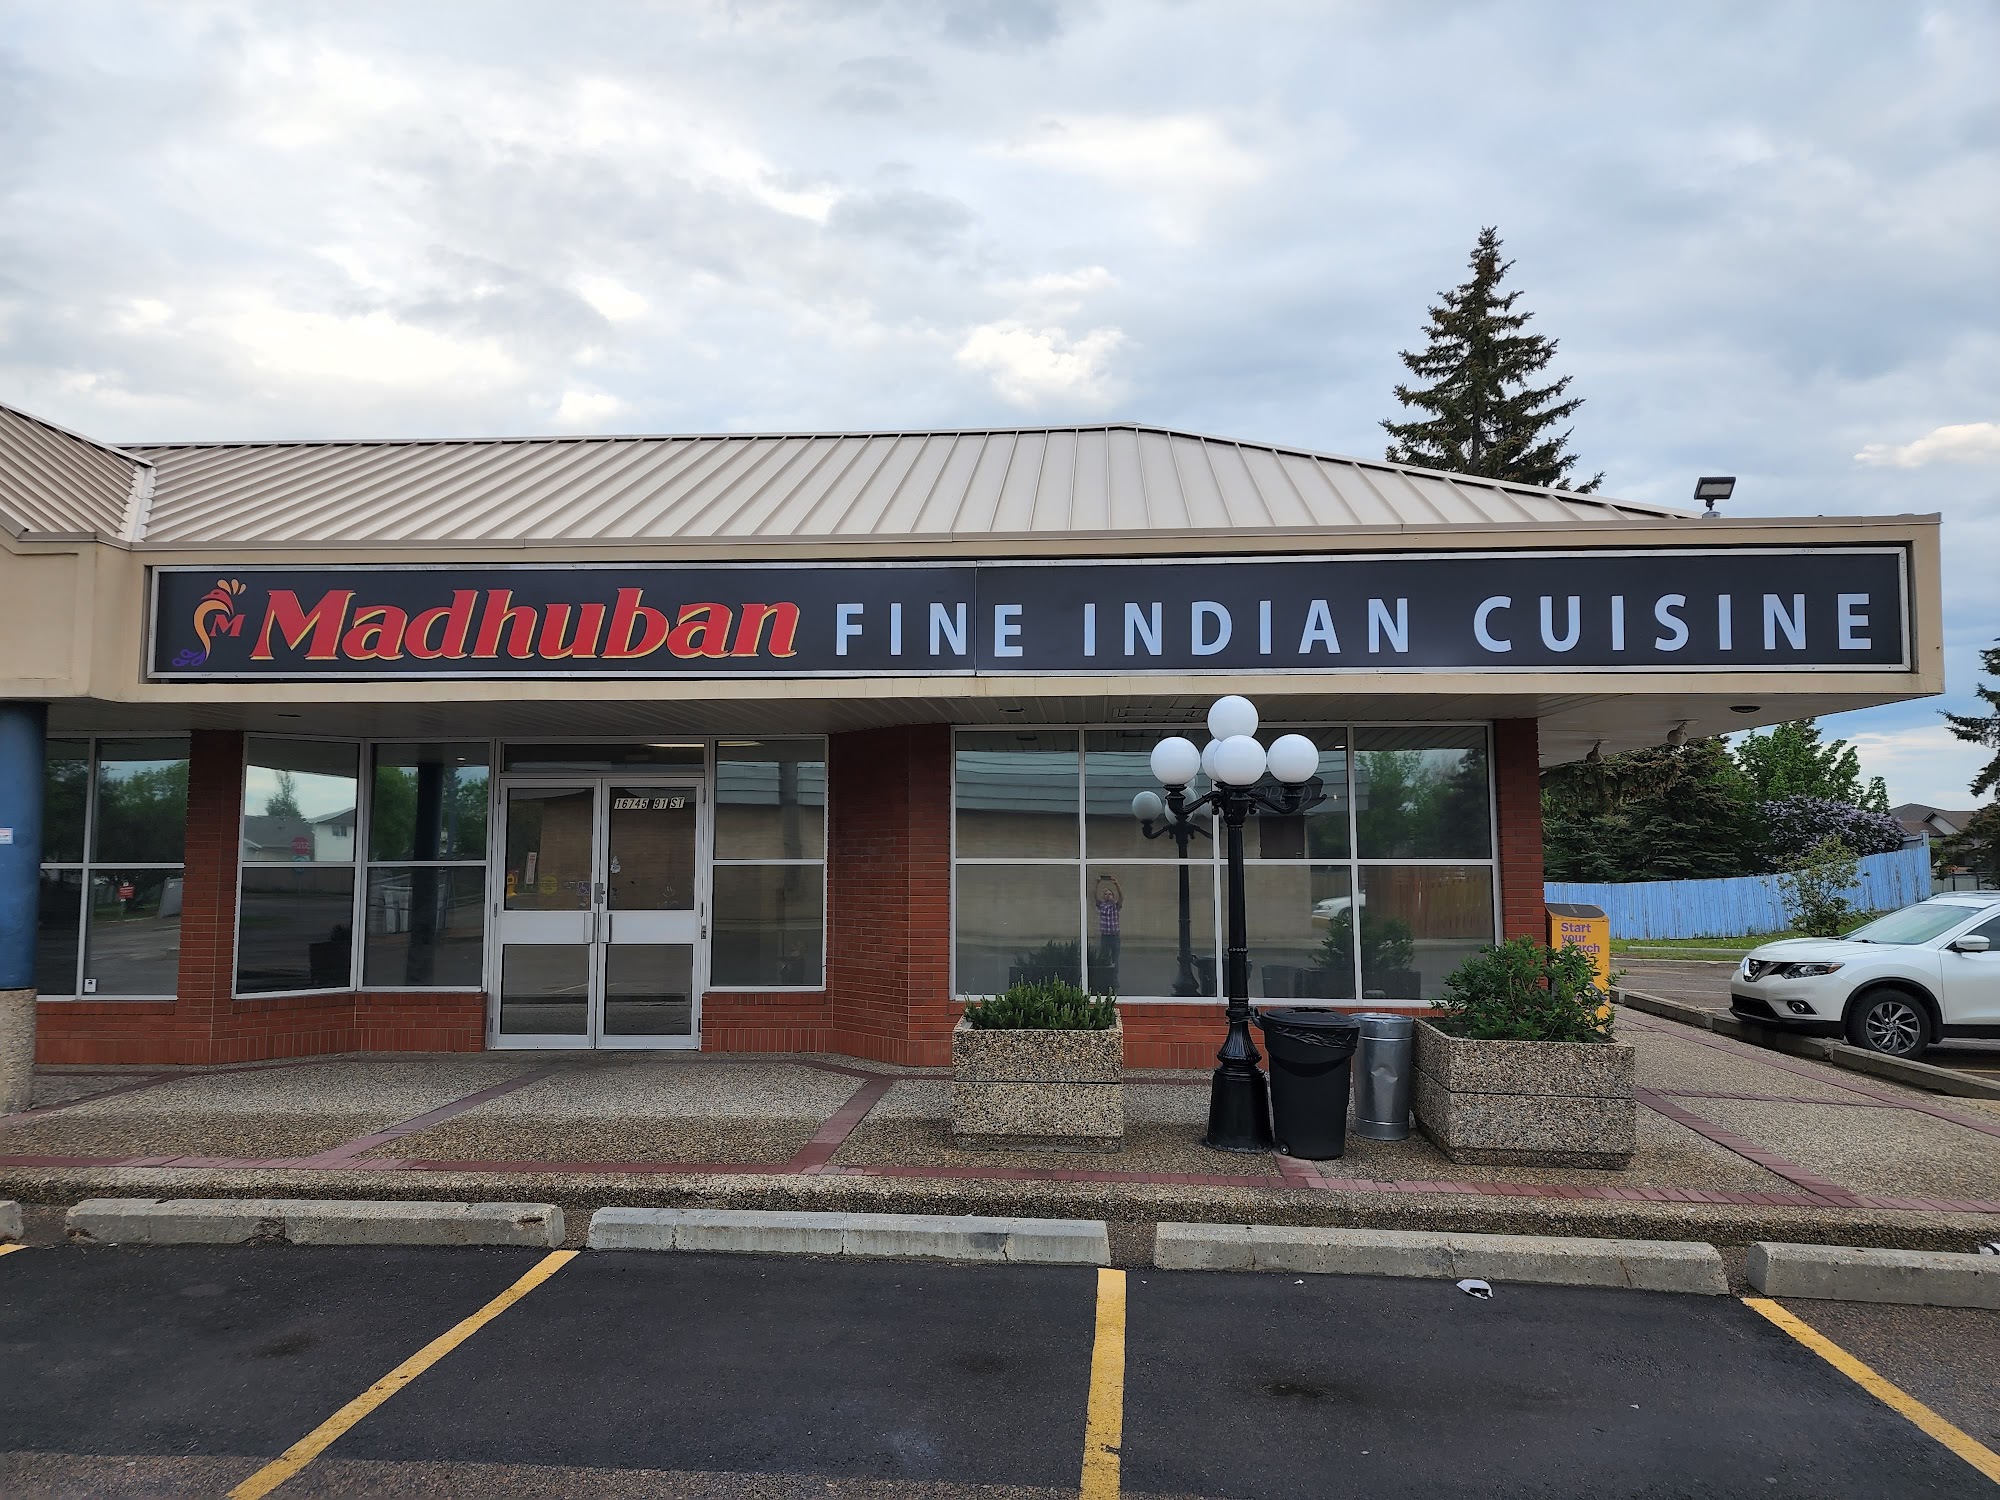 Madhuban Fine Indian Cuisine - Best Indian Cuisine Restaurants in Edmonton